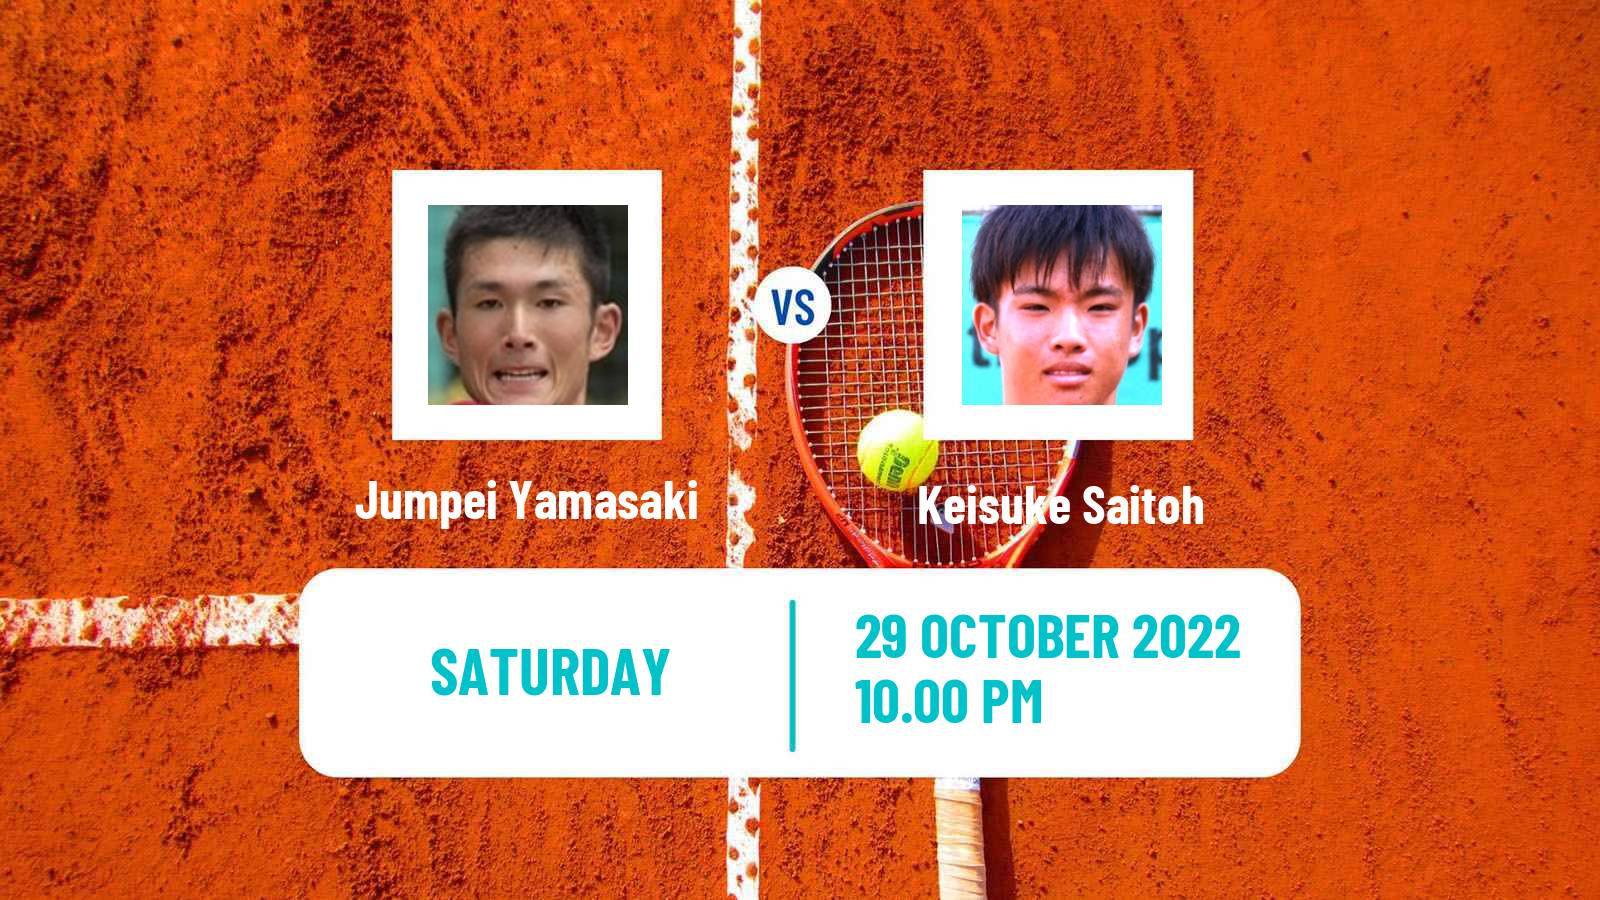 Tennis ATP Challenger Jumpei Yamasaki - Keisuke Saitoh